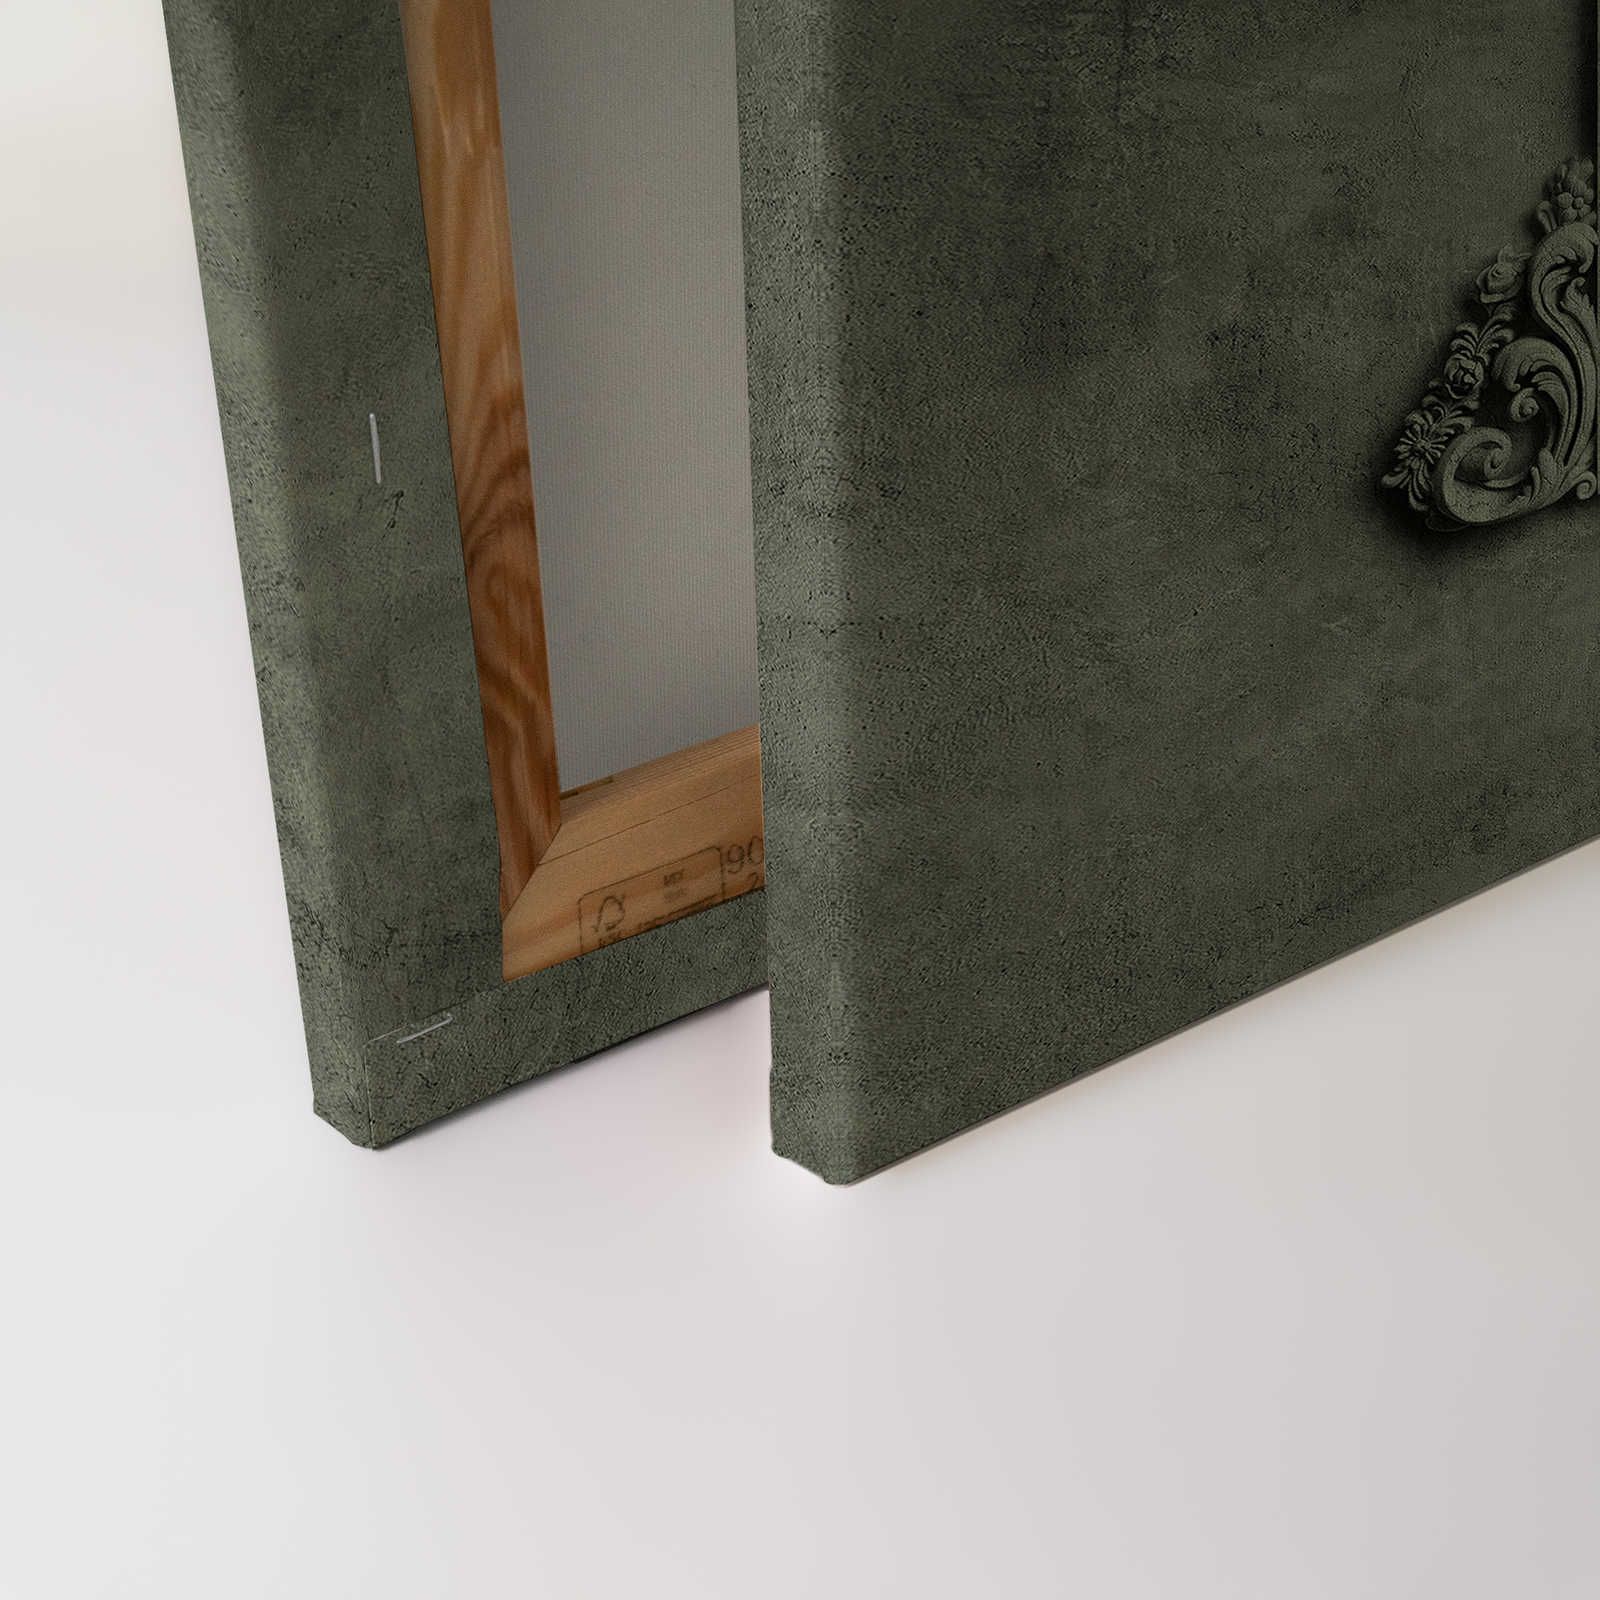             Lyon 2 - Canvas schilderij 3D stucco frame & gipslook in groen - 1.20 m x 0.80 m
        